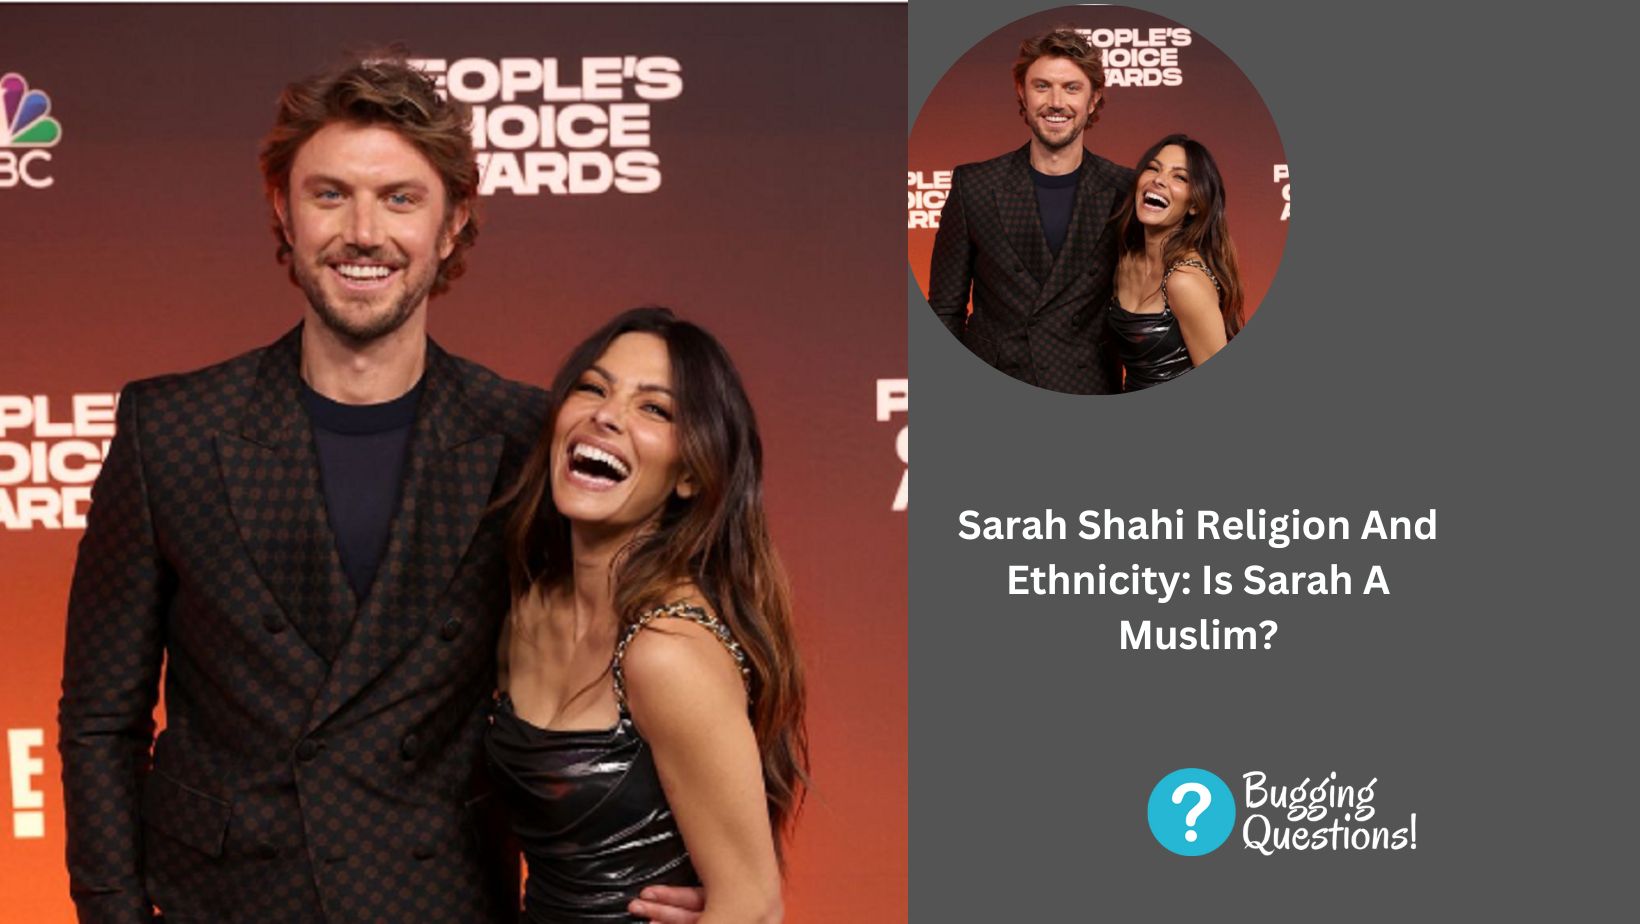 Sarah Shahi Religion And Ethnicity: Is Sarah A Muslim?